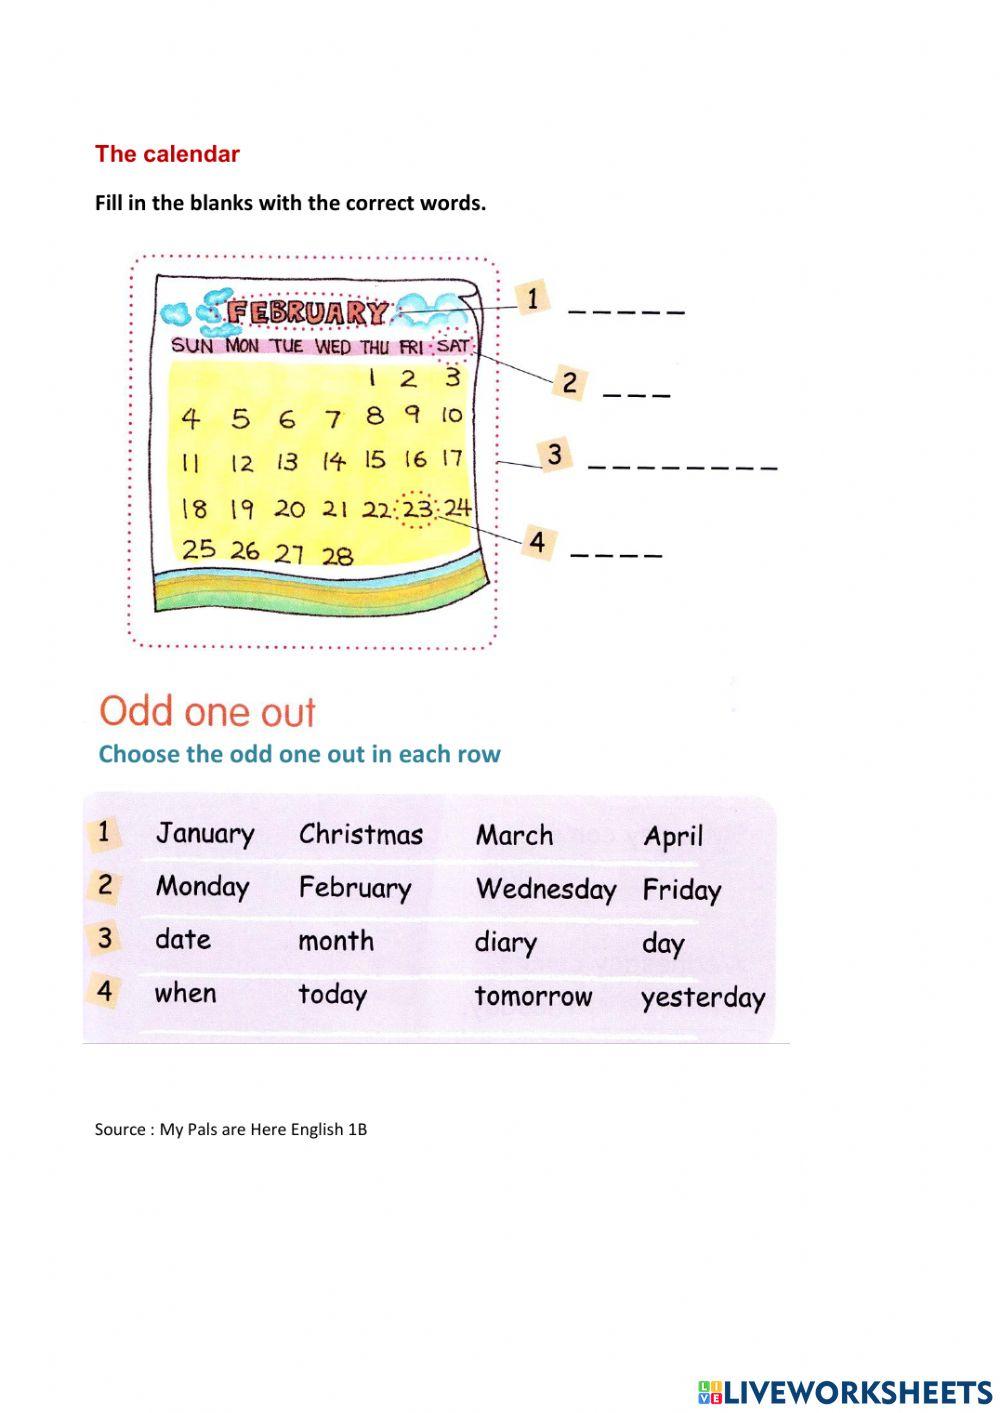 The Calendar